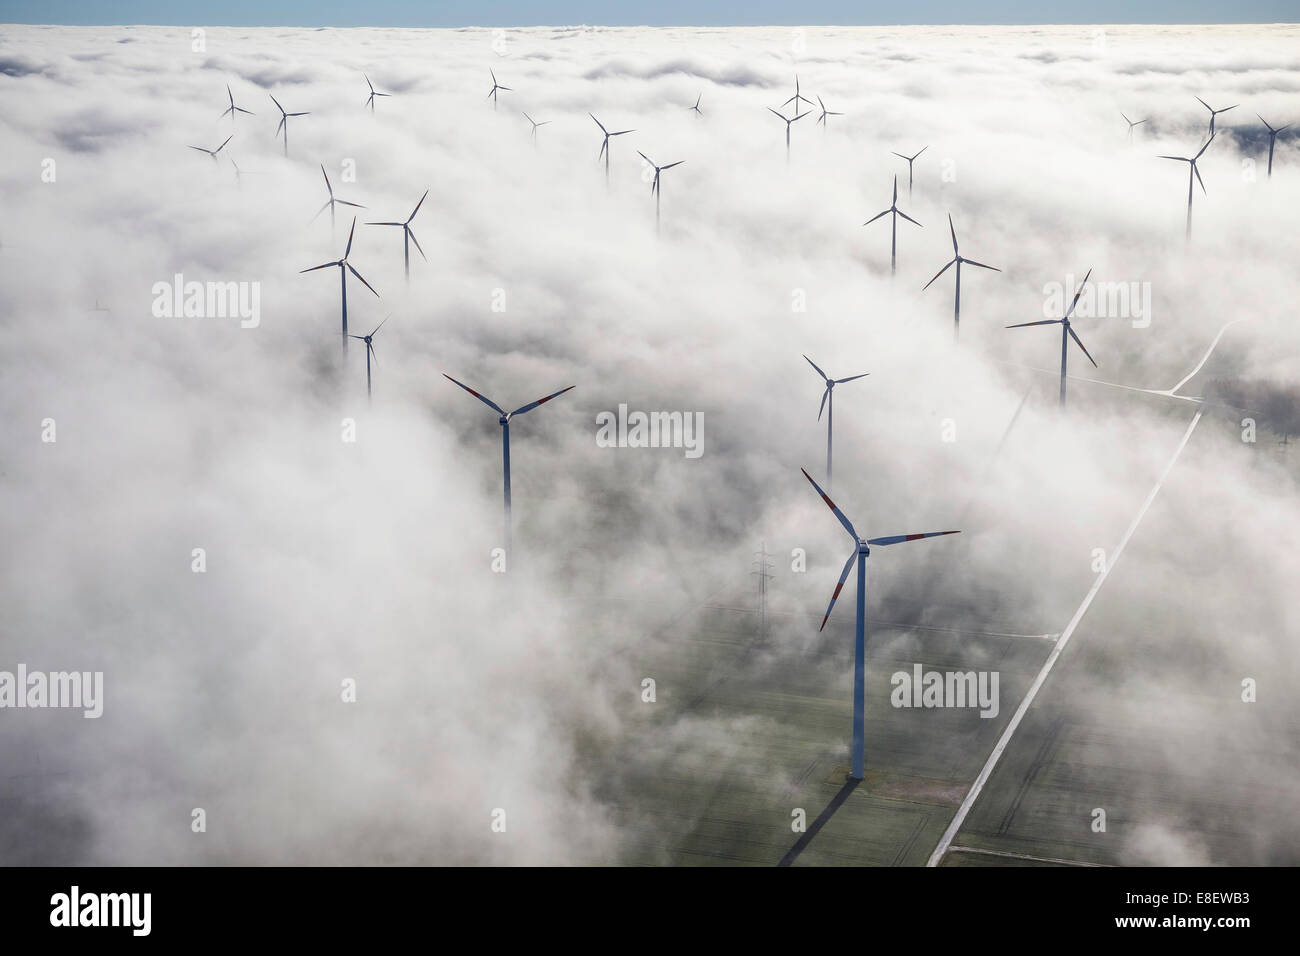 Wind turbines covered by low clouds, blue sky, aerial view, Marsberg, Sauerland region, North Rhine-Westphalia, Germany Stock Photo